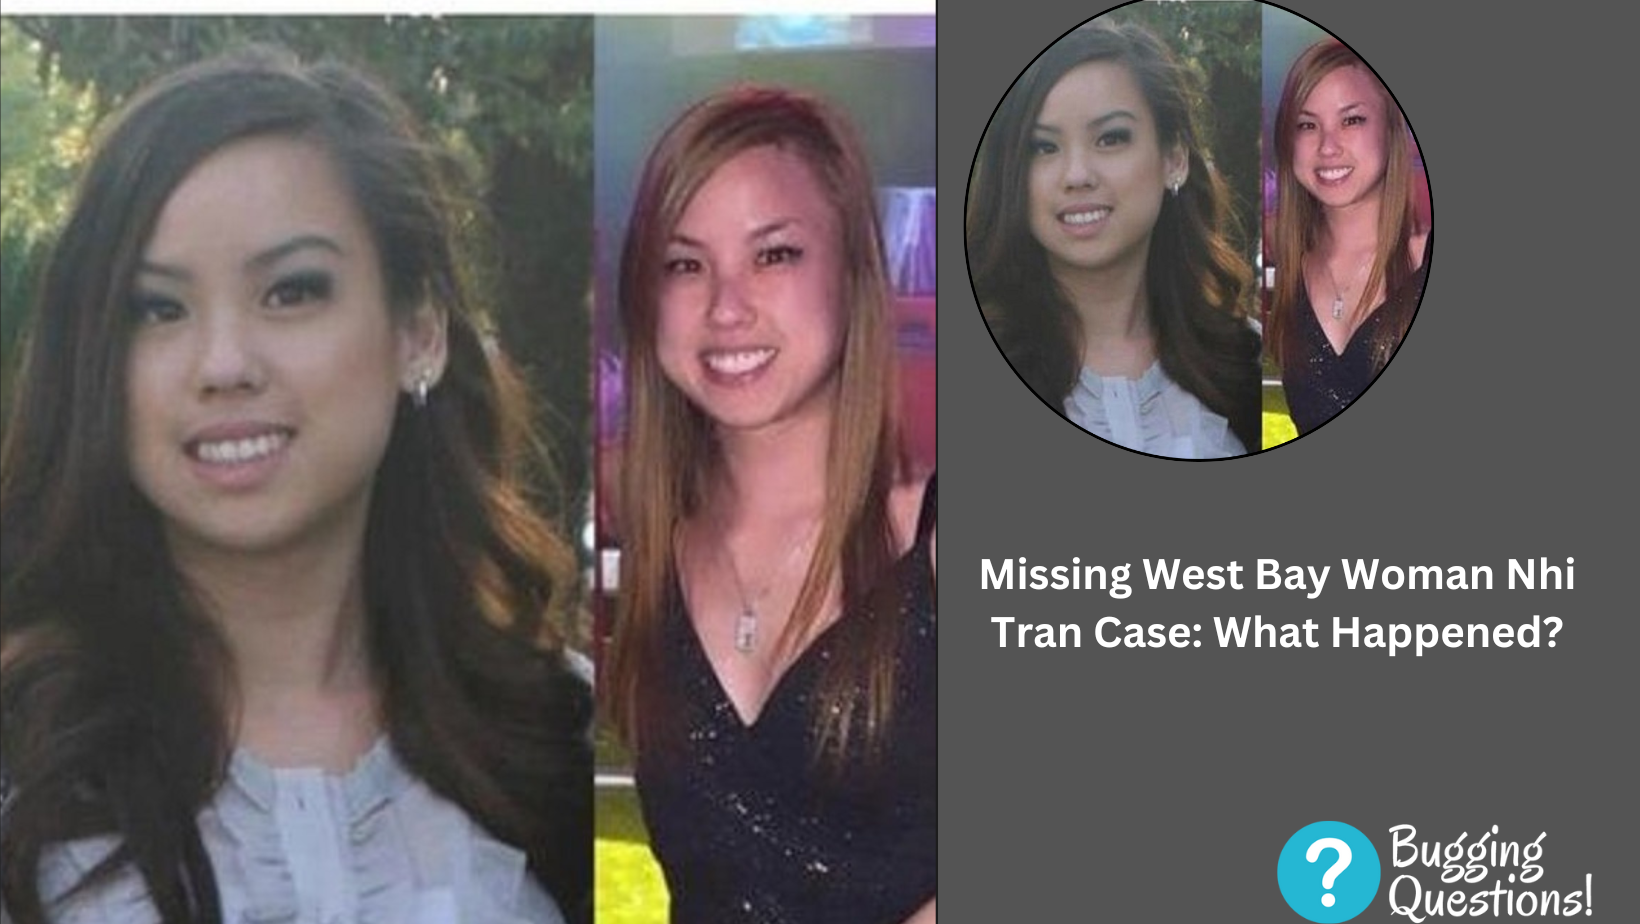 Missing West Bay Woman Nhi Tran Case